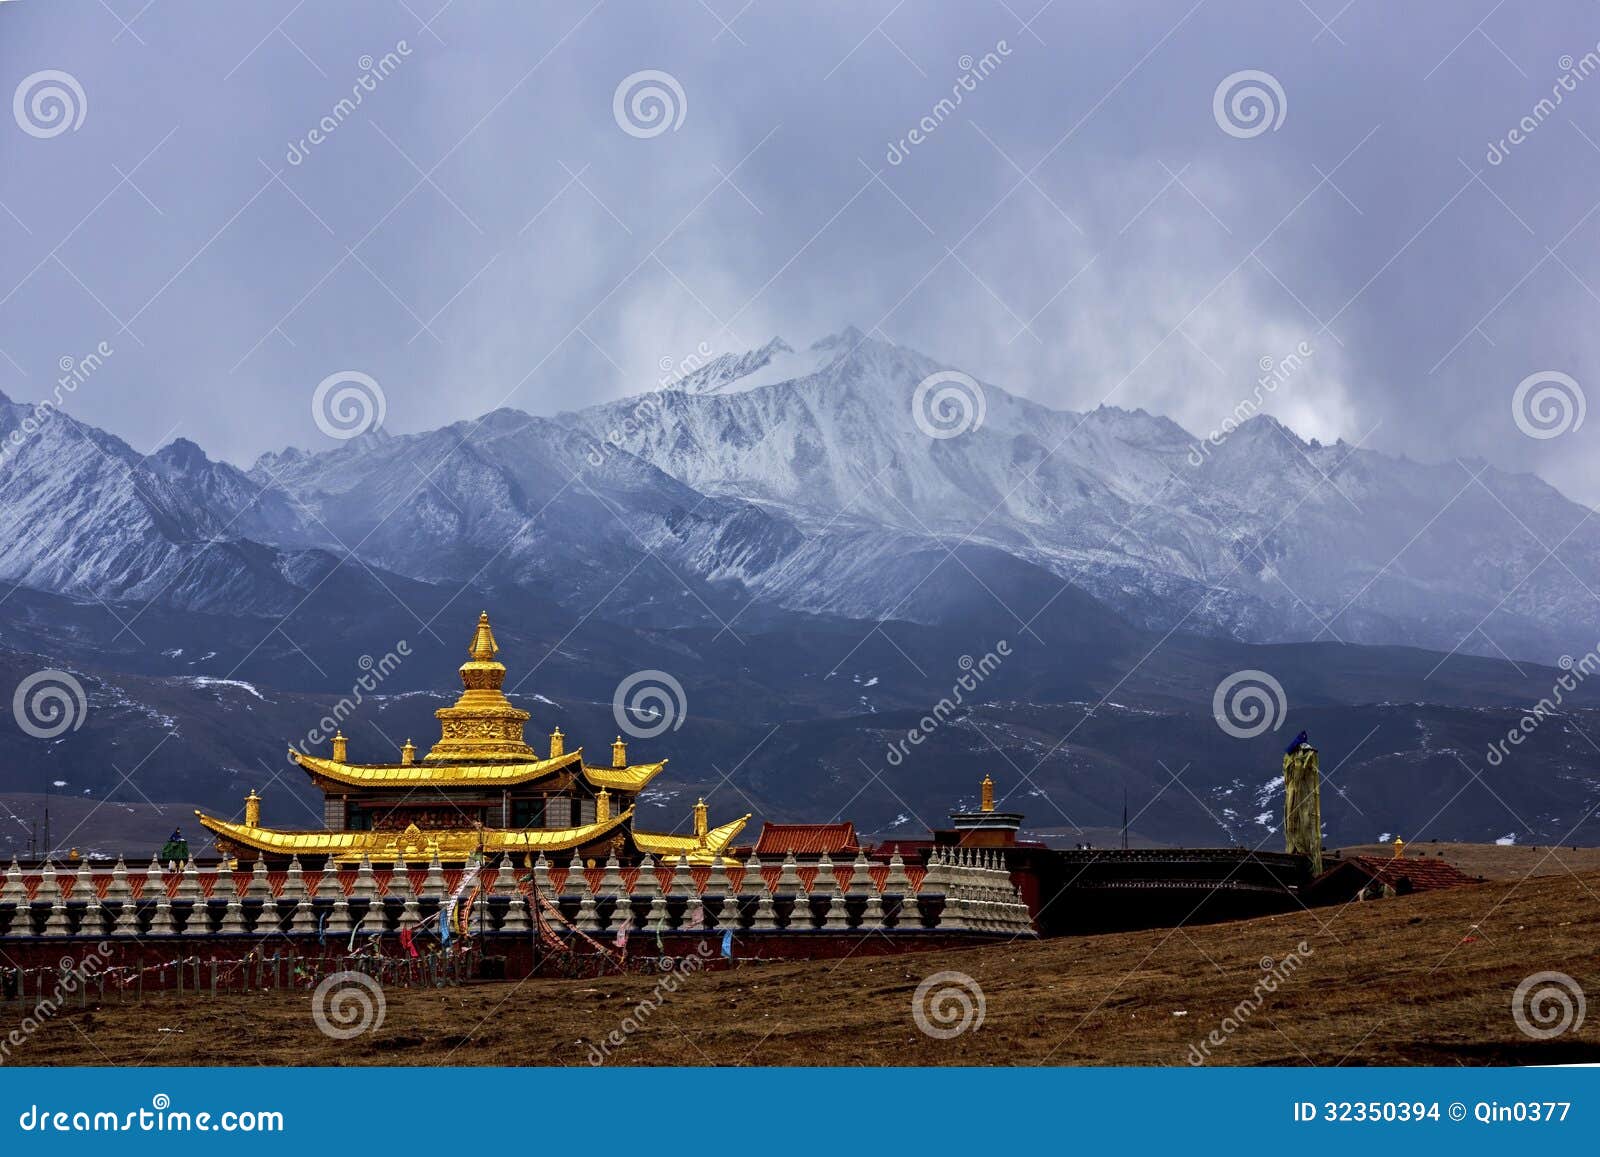 yalla snow-capped mountains, called the tibetan xia xueya laga wave